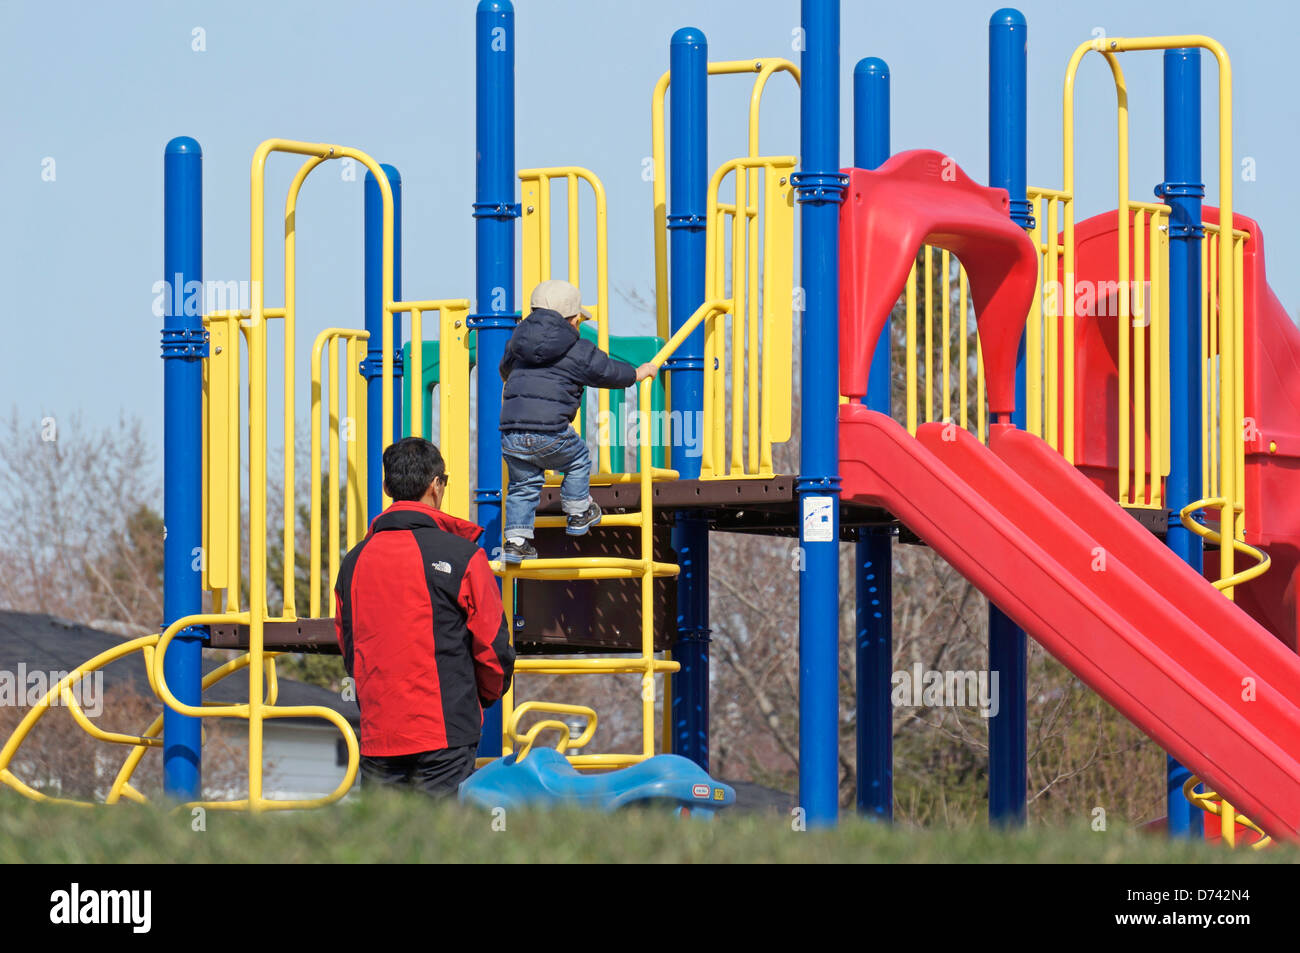 Children's Playground, Slides on School Grounds Stock Photo